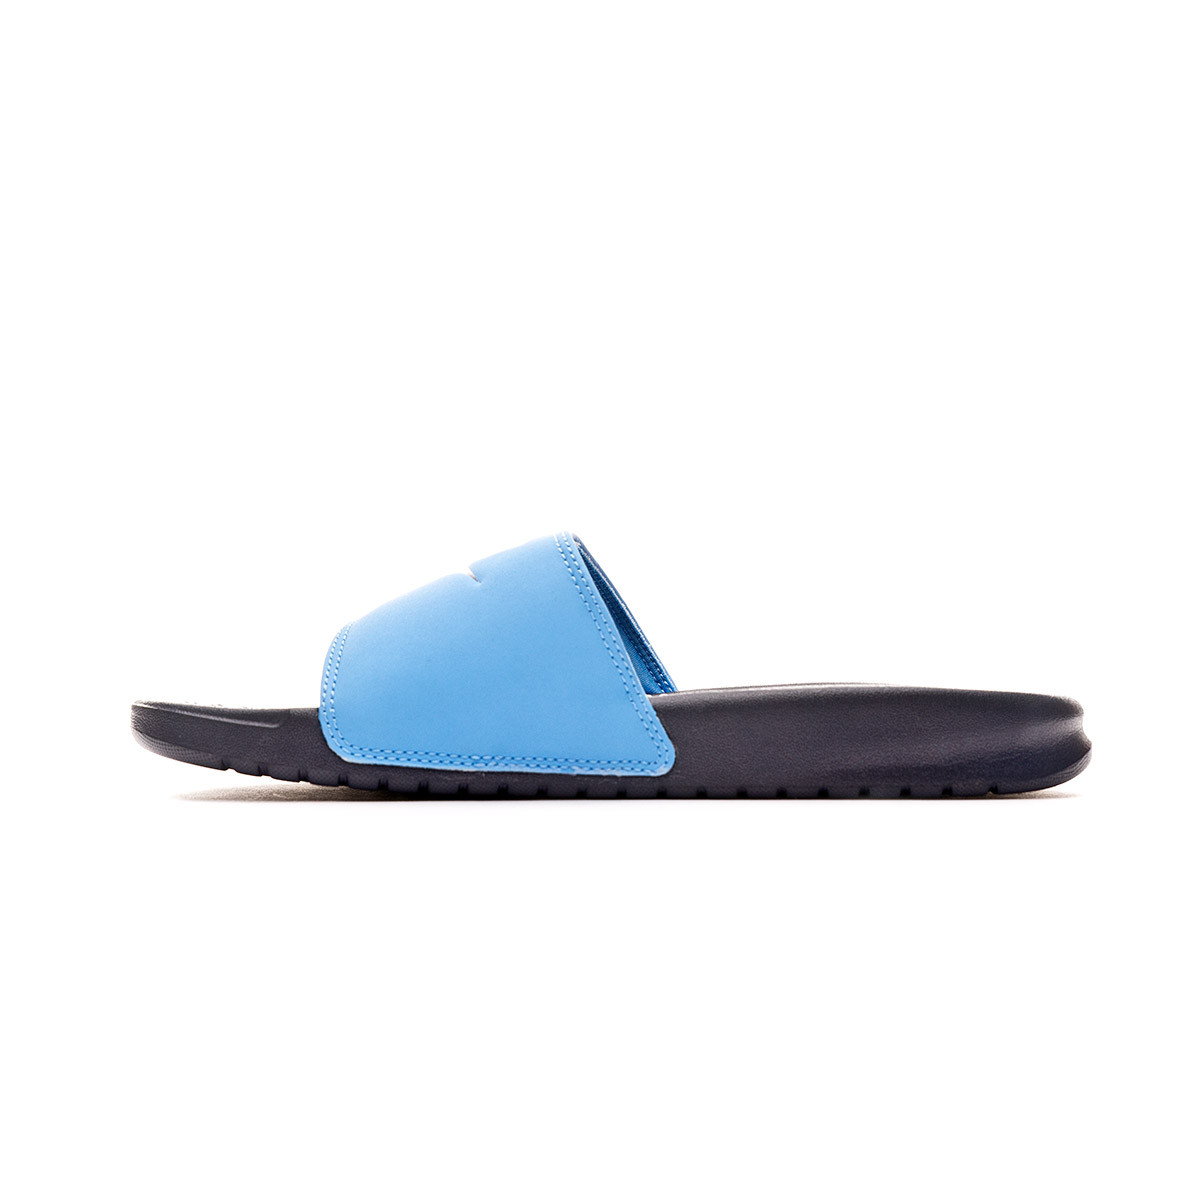 blue and white nike flip flops